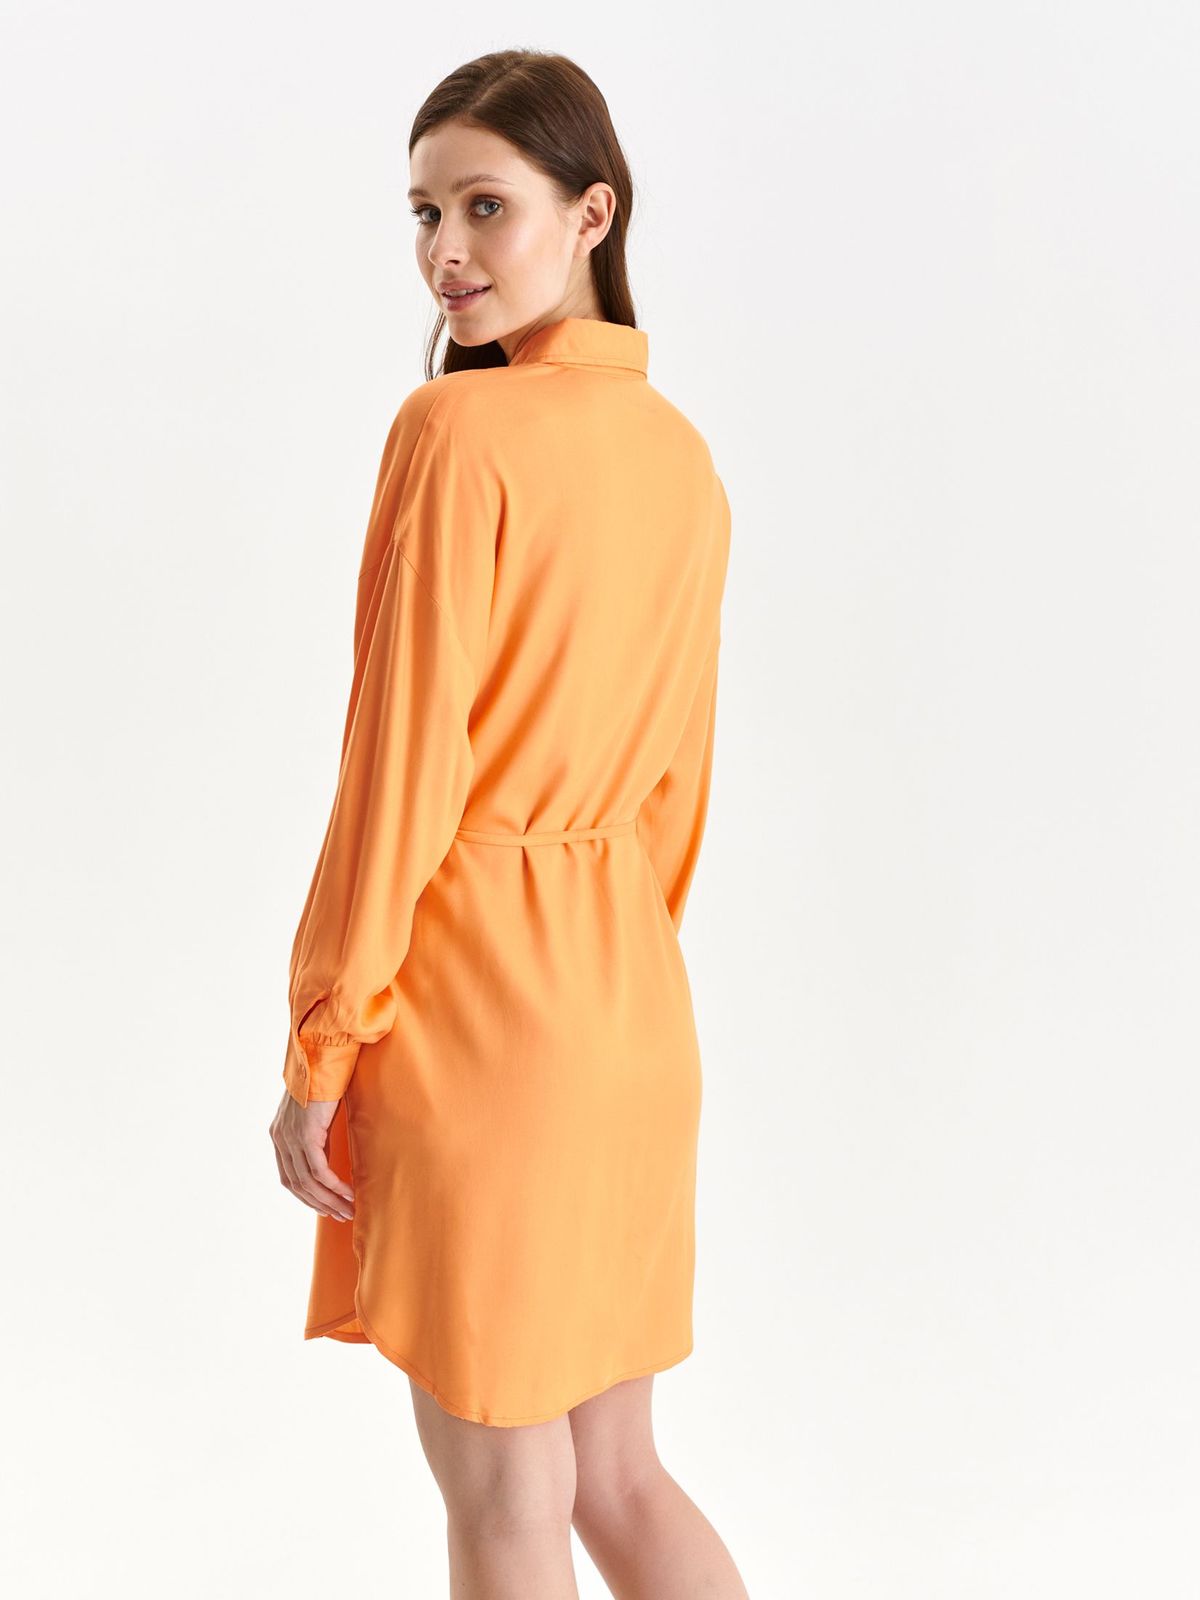 Orange dress thin fabric shirt dress loose fit with puffed sleeves 3 - StarShinerS.com